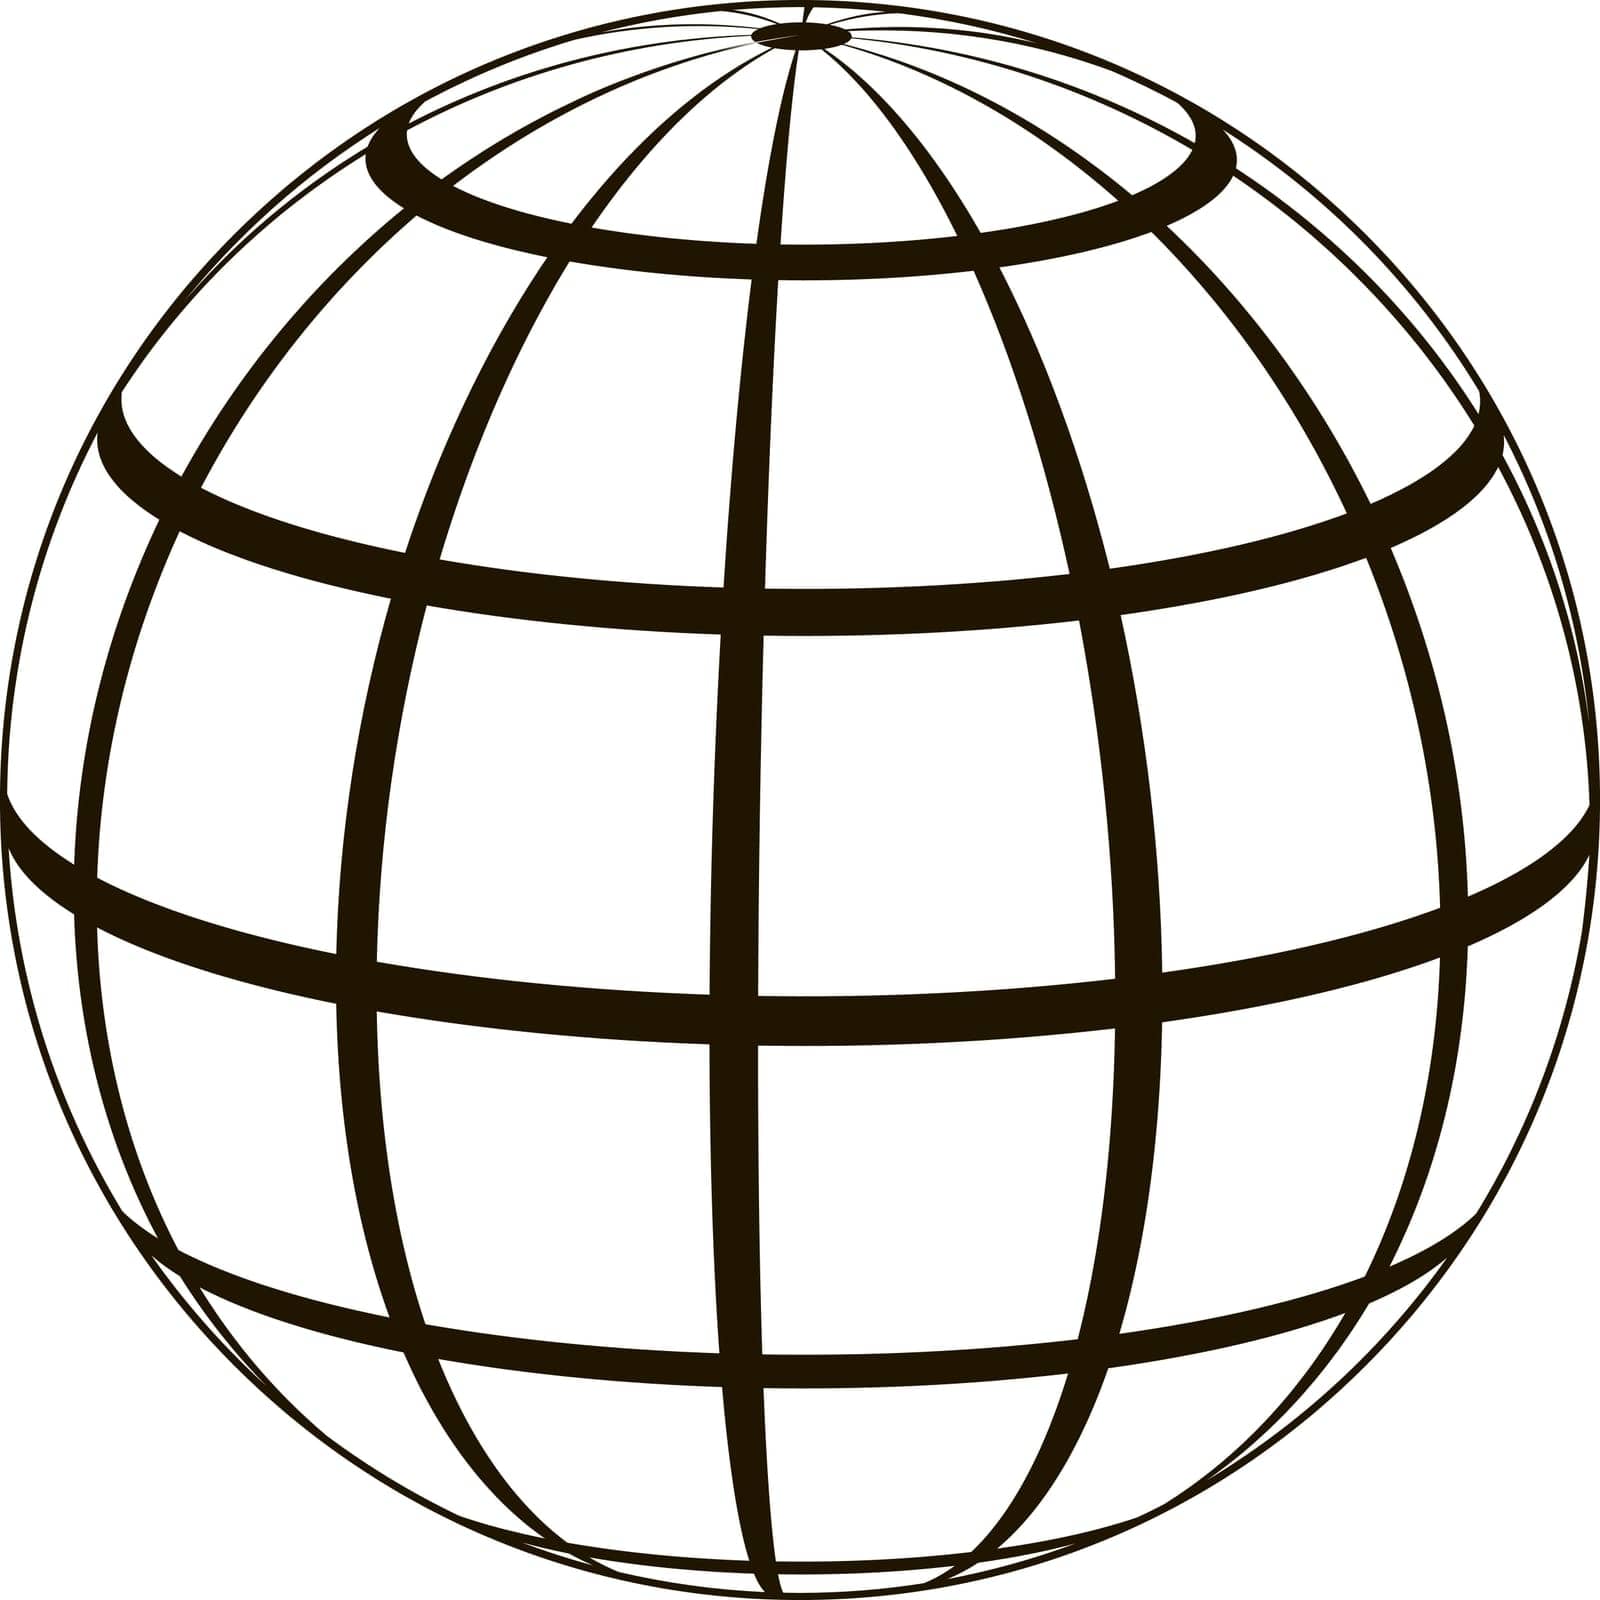 Graticule globe Meridian parallel field lines  surface template graticule by koksikoks